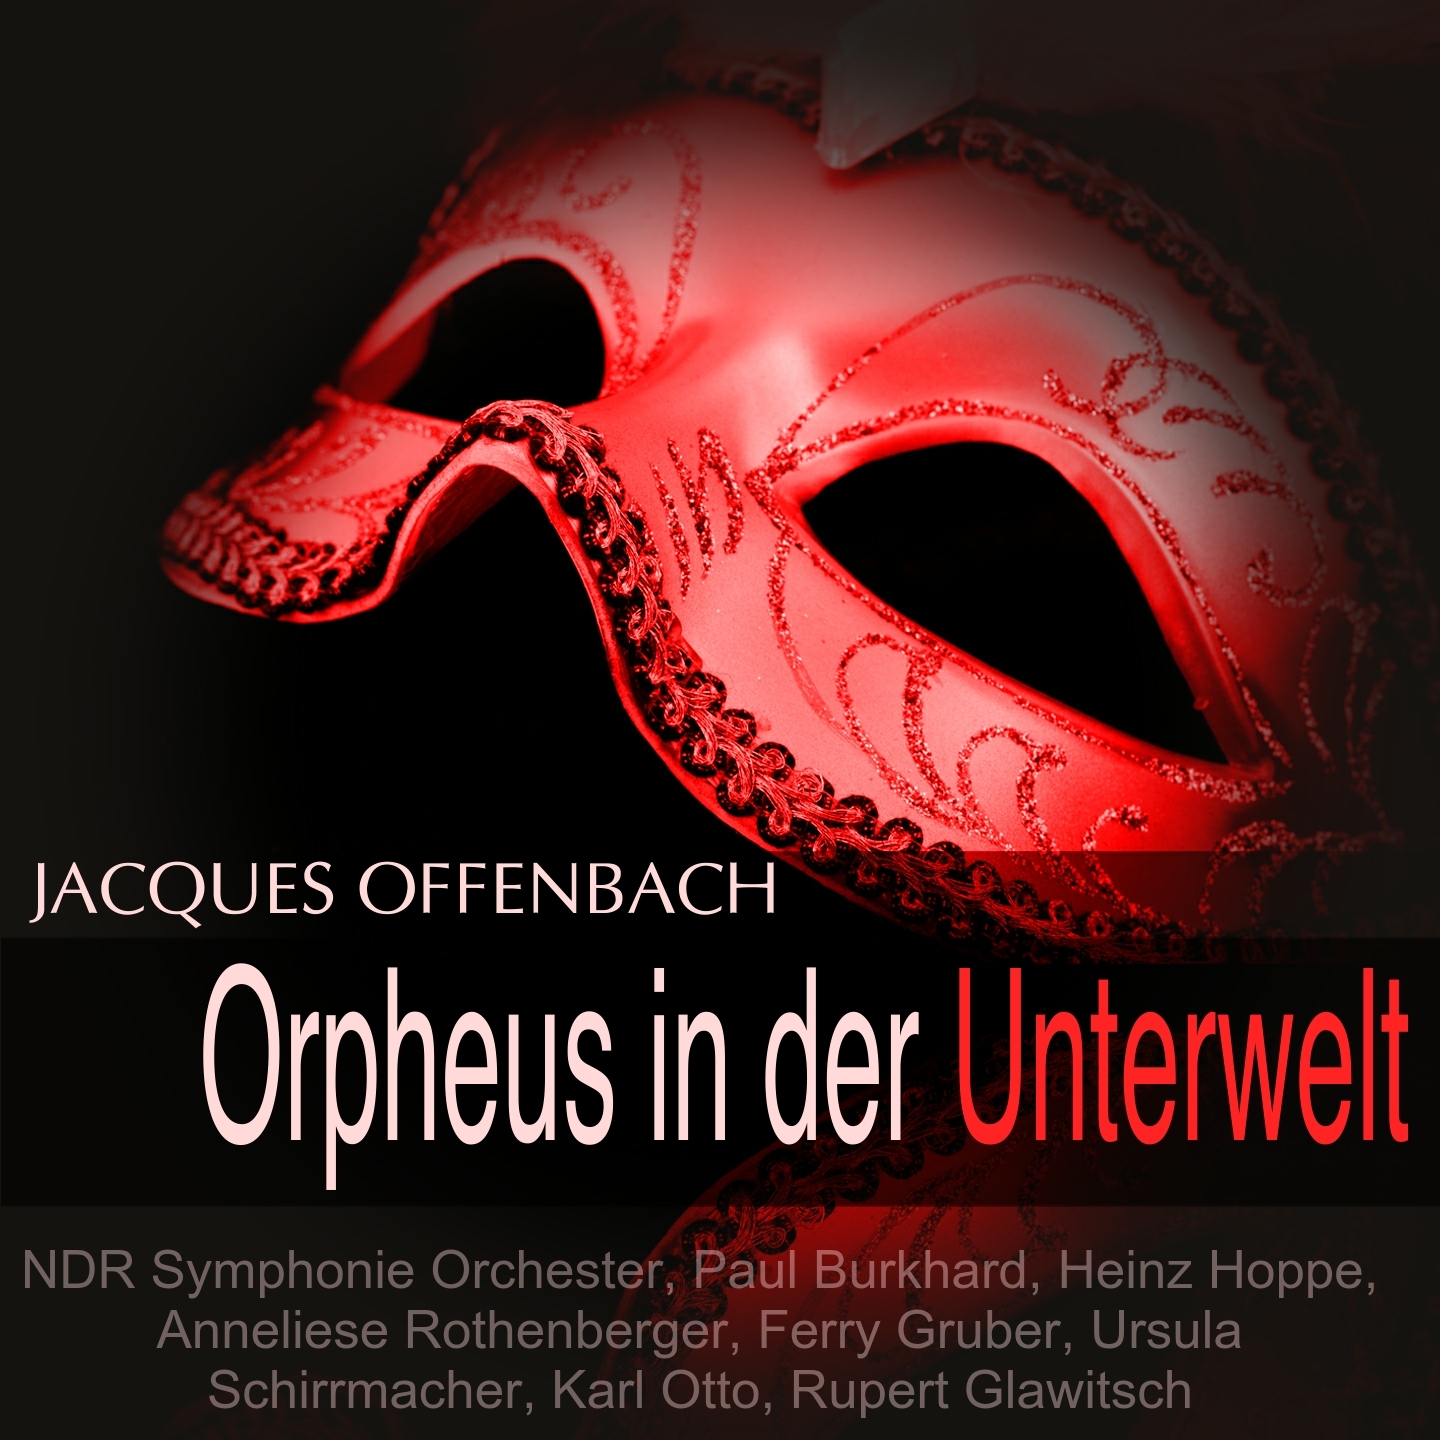 Orpheus in der Unterwelt: Dialog 9 (Eurydike, Jupiter)